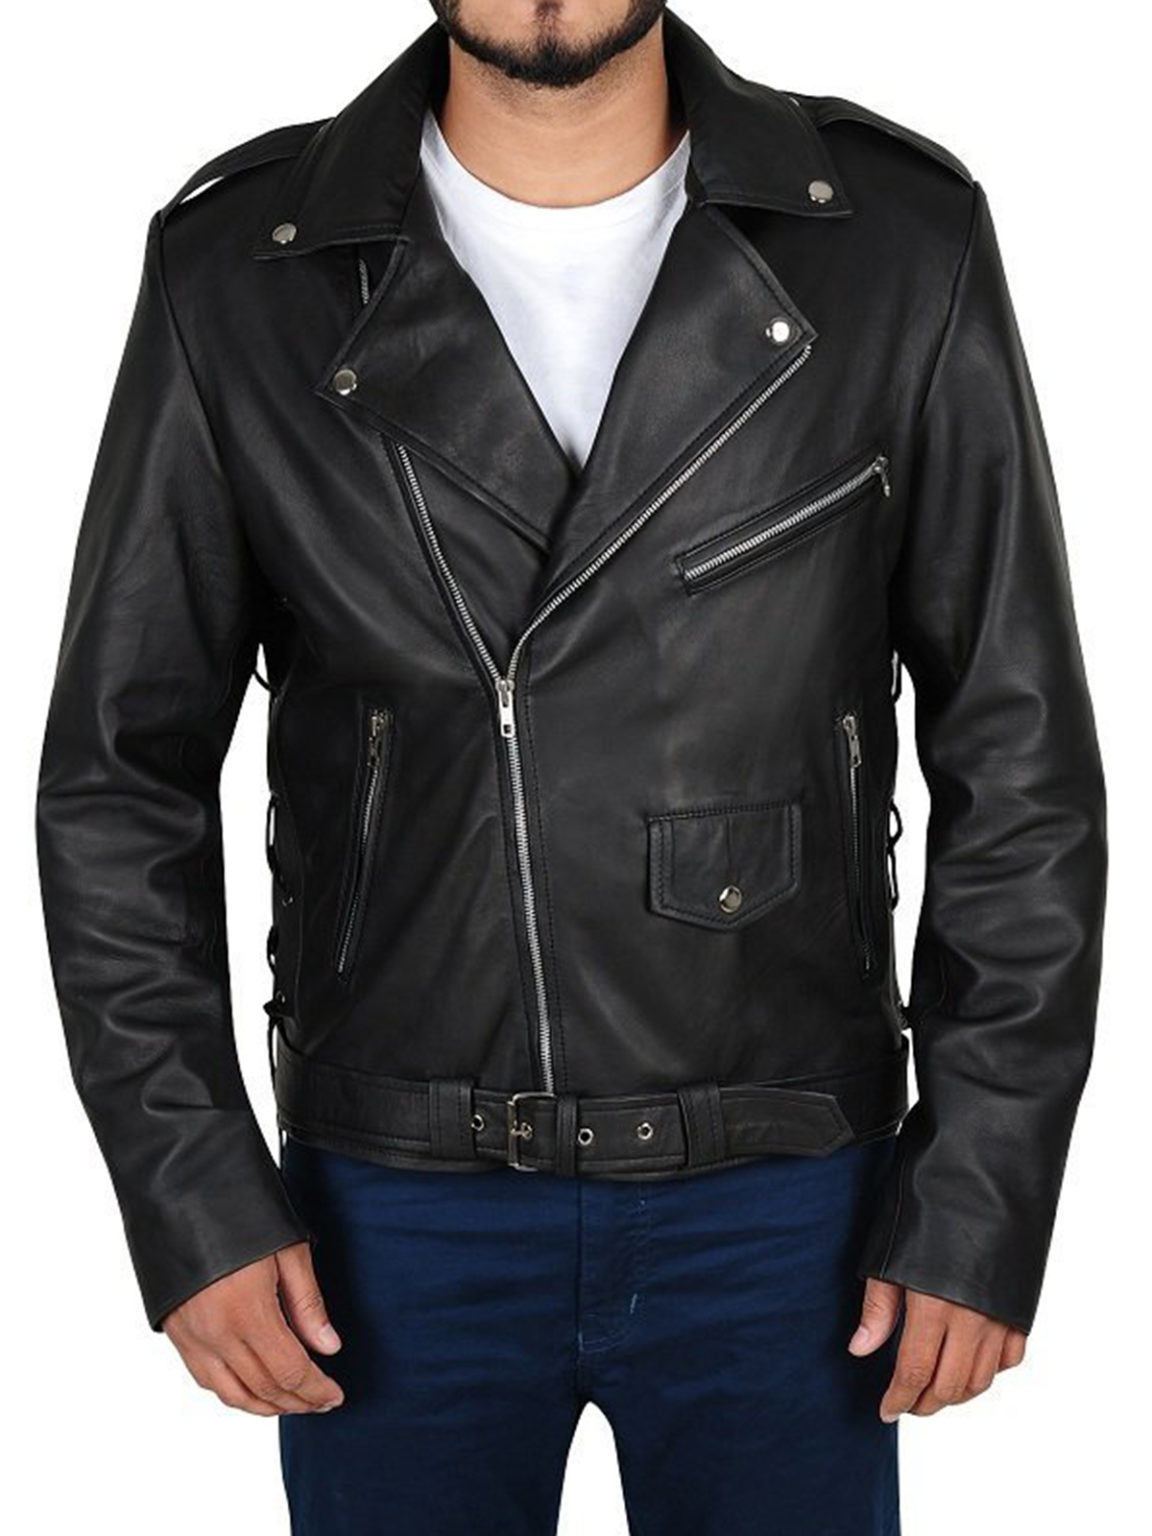 Rapper G-Eazy Brando Biker Style Leather Jacket - Stars Jackets